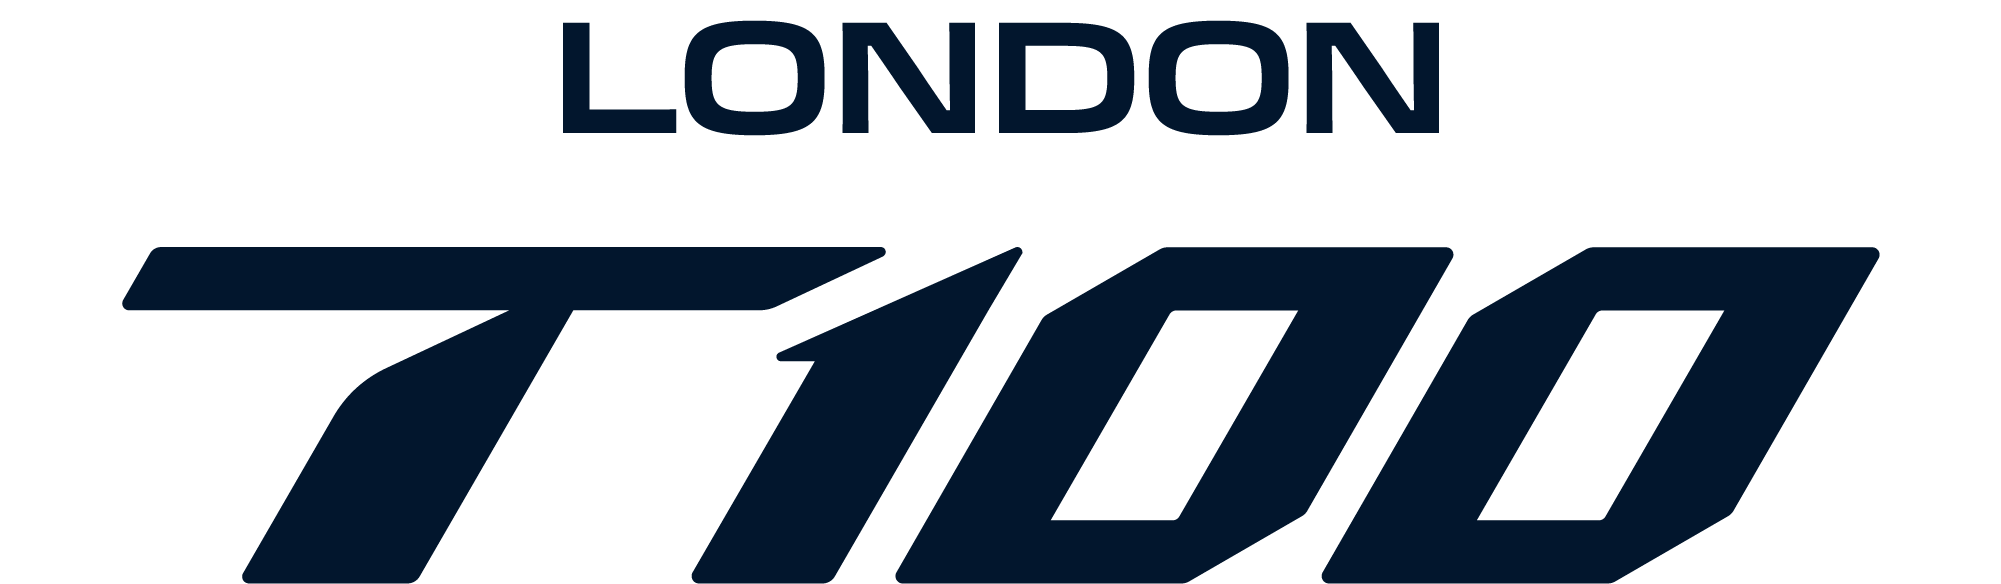 London T100 - Olympic